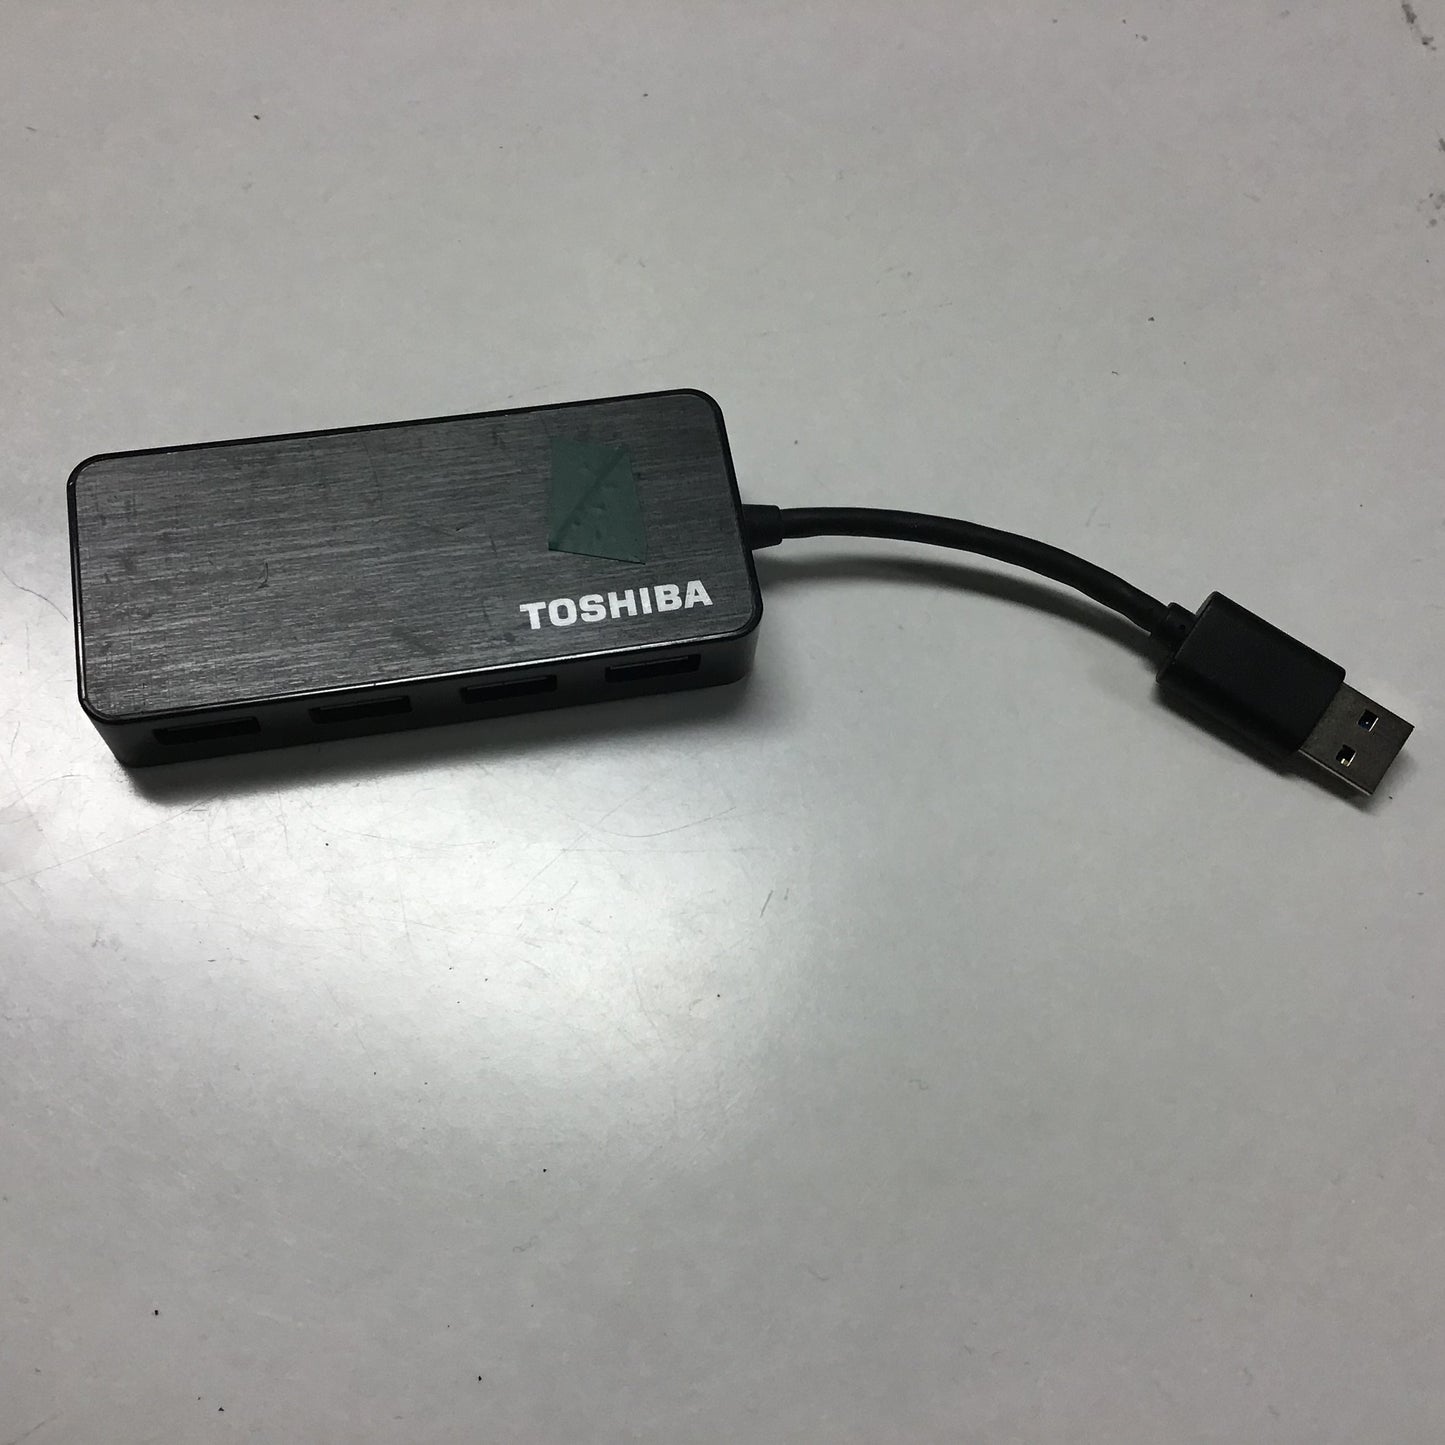 Toshiba USB Hub